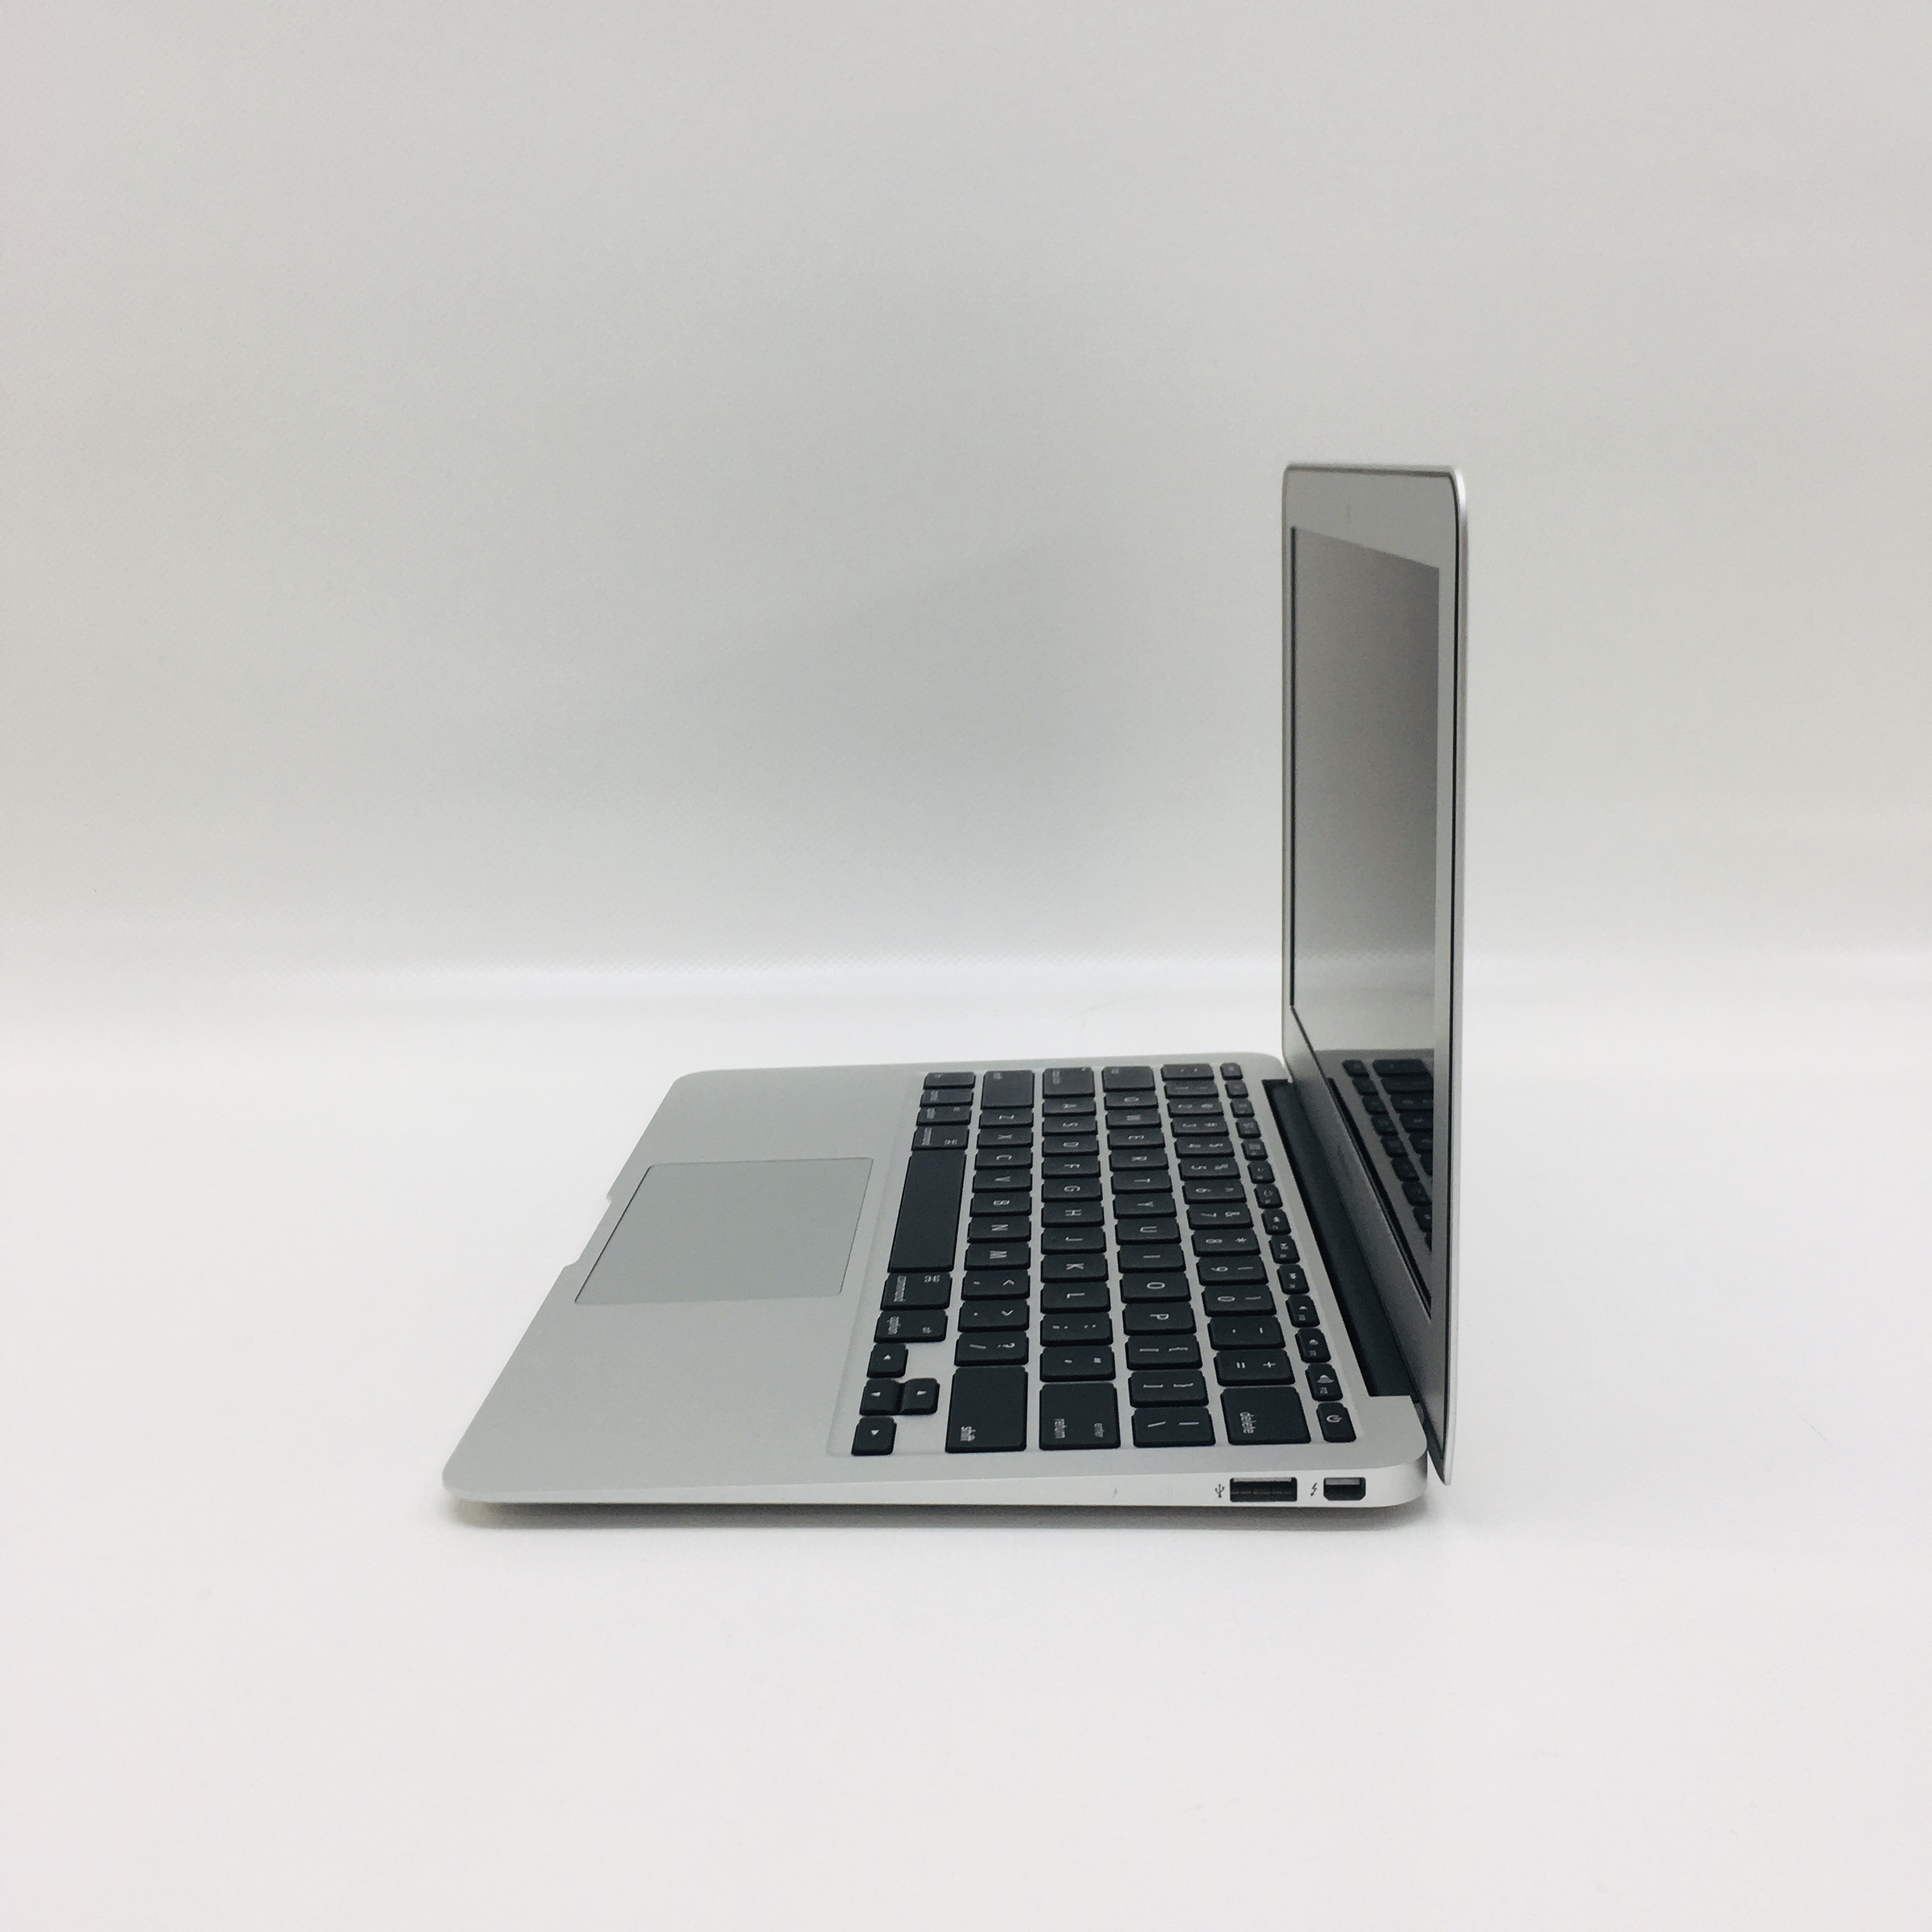 MacBook Air 11" Early 2015 (Intel Core i5 1.6 GHz 4 GB RAM 256 GB SSD), Intel Core i5 1.6 GHz, 4 GB RAM, 256 GB SSD, image 4